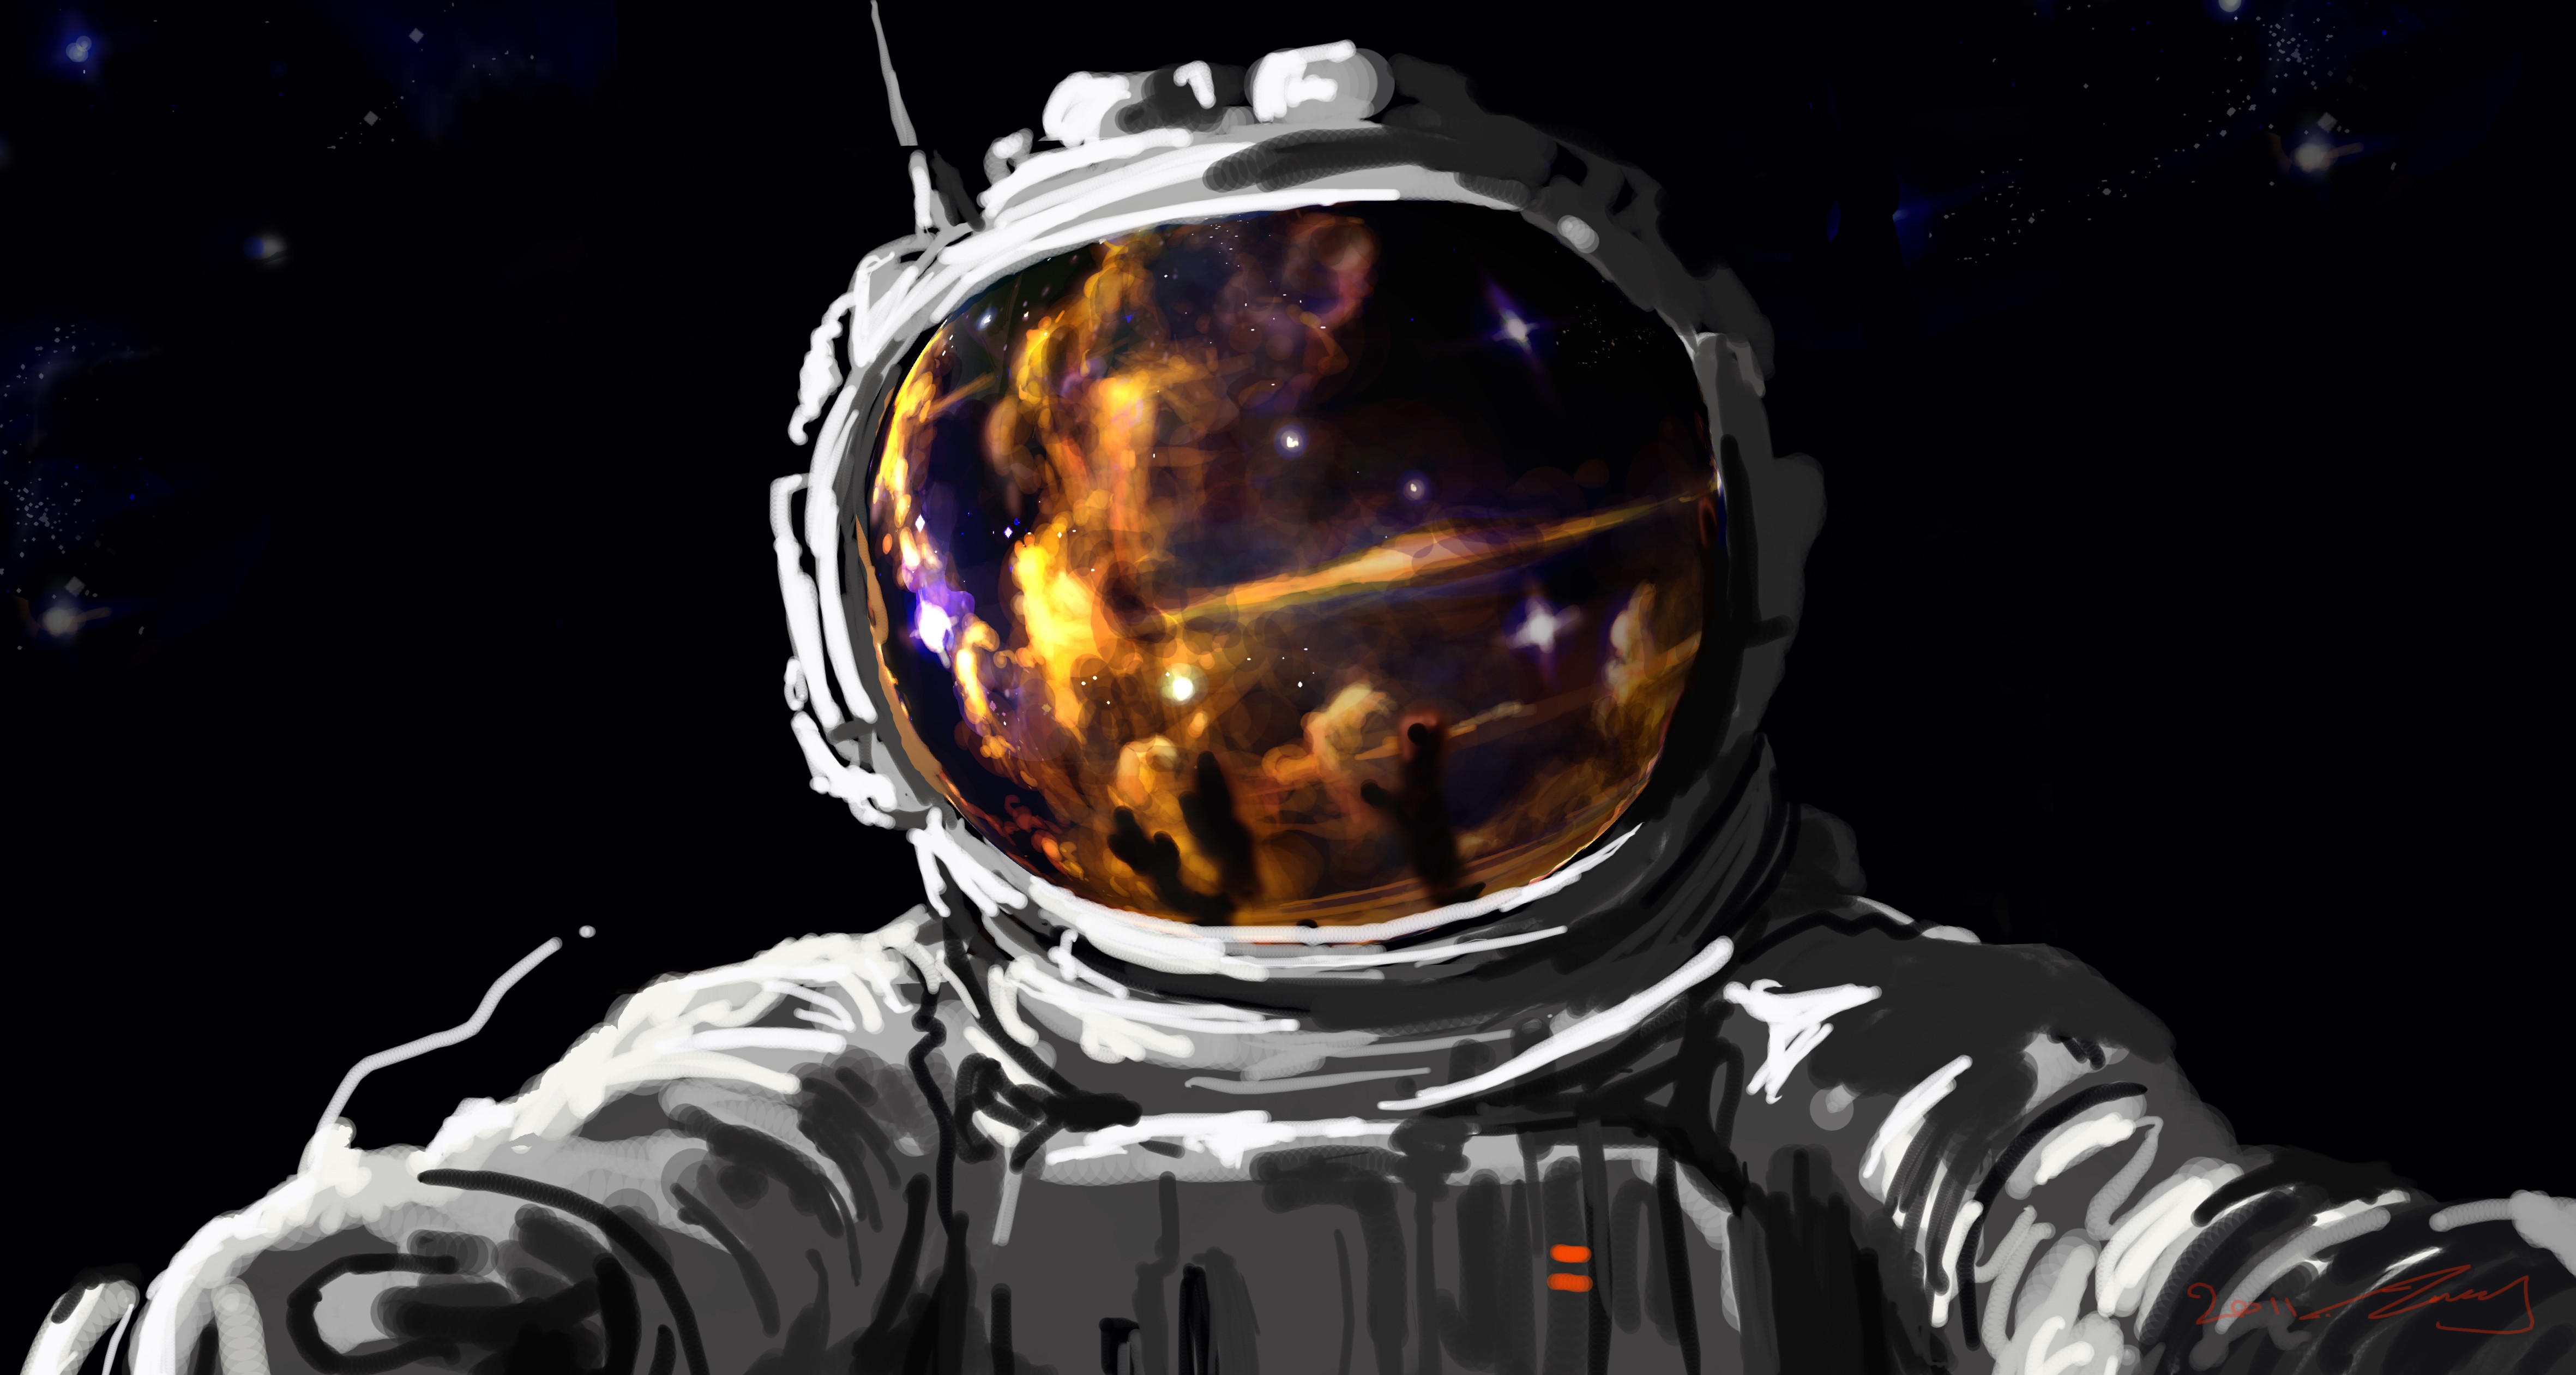 Artwork Fantasy Art Concept Art Space Astronaut Spacesuit Stars Digital Art Painting 4724x2521